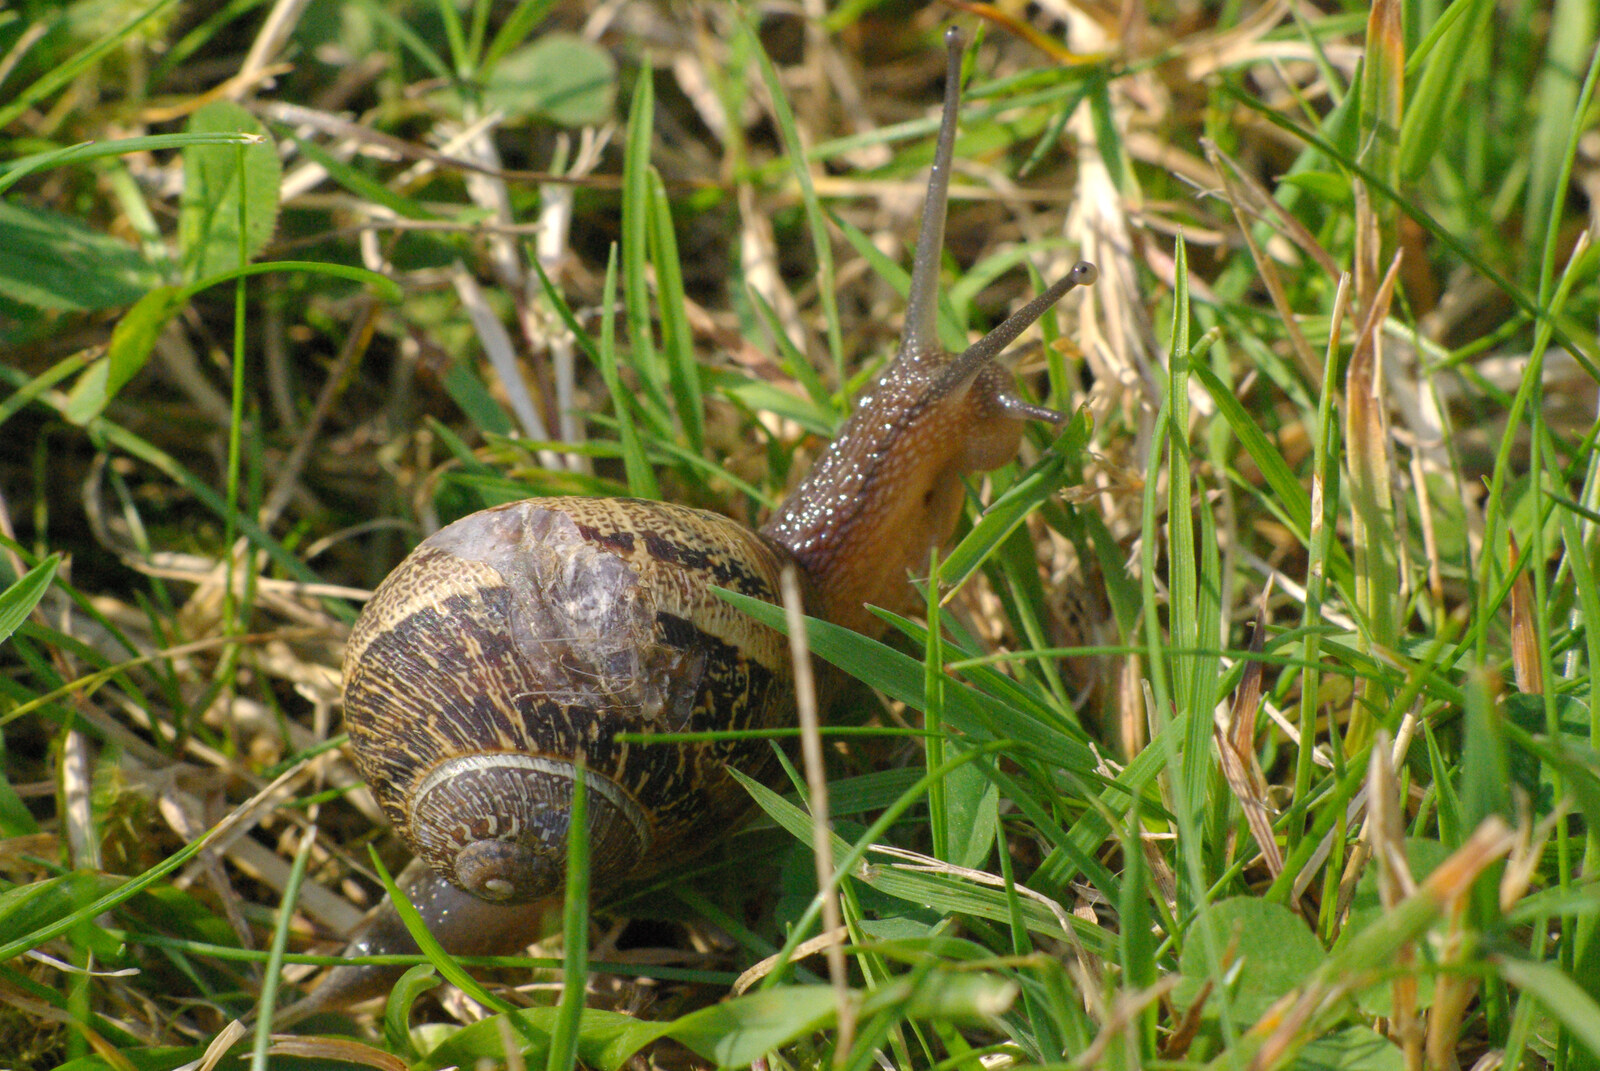 Stourbridge Fair at the Leper Chapel, Cambridge - 8th September 2007: A snail slimes around the garden